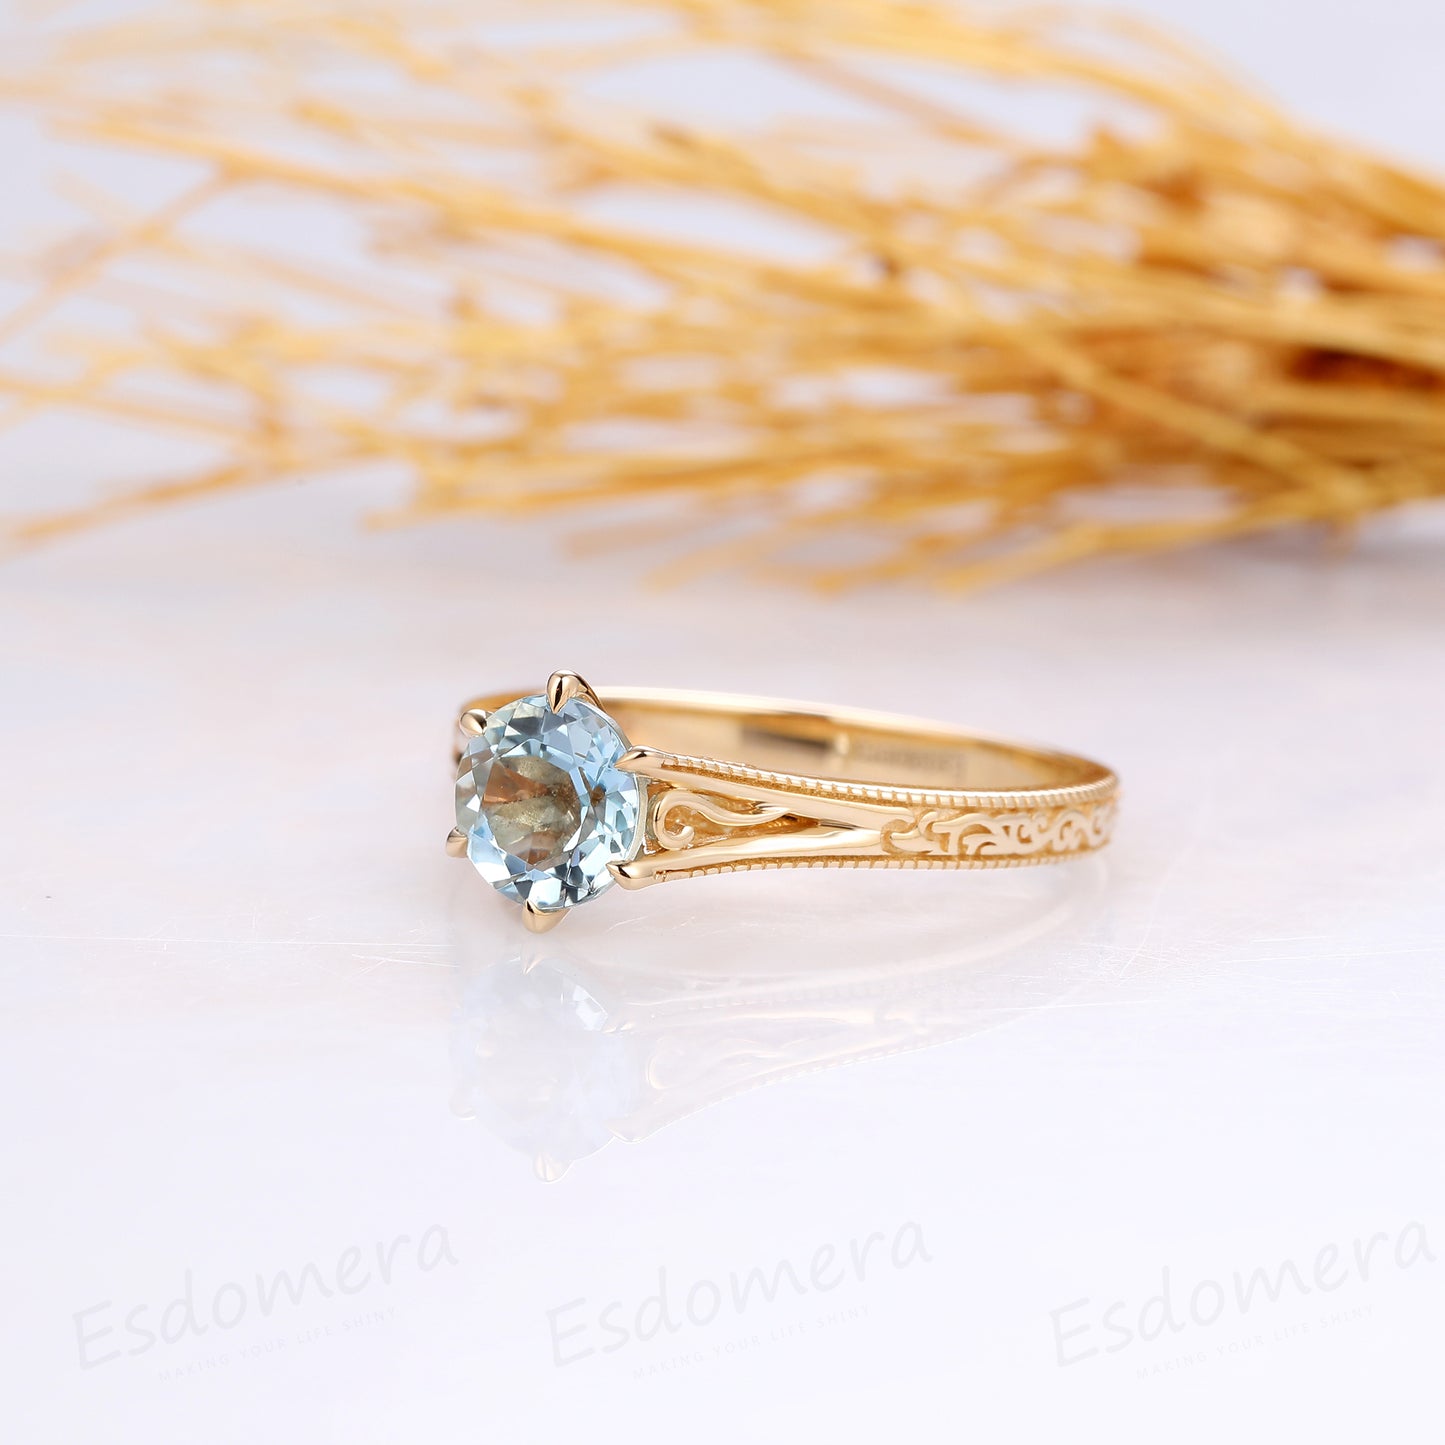 Antique Filigree Aquamarine Ring, Solitaire 6 Prong 1CT Round Cut Aquamarine Wedding Ring 14k Yellow Gold